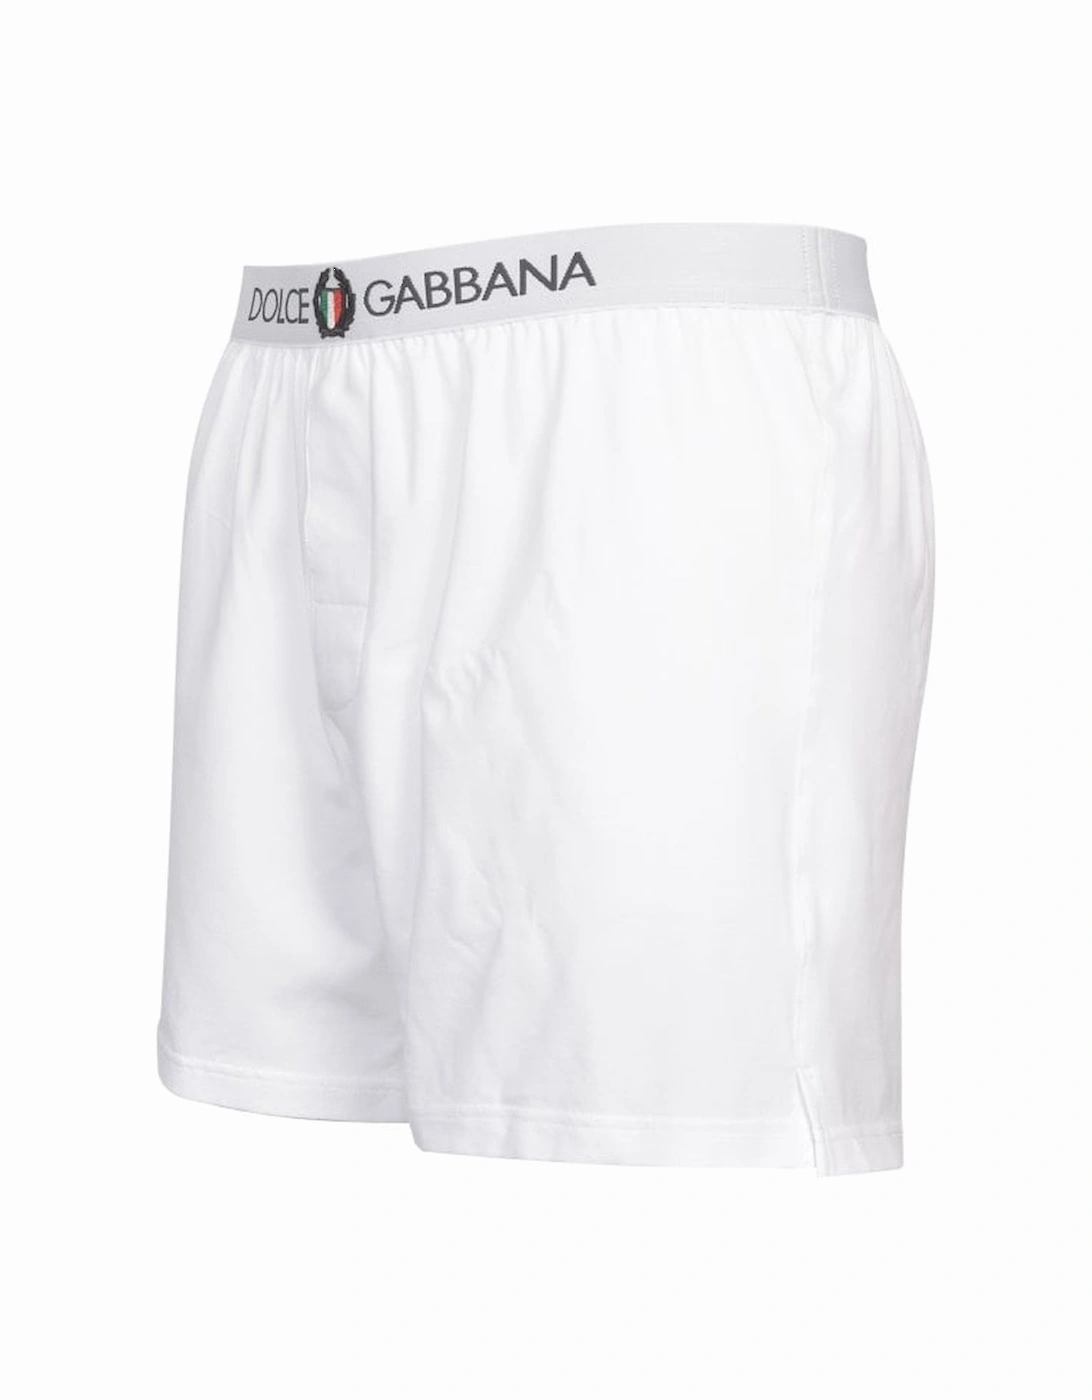 Sport Crest Lounge Shorts, White